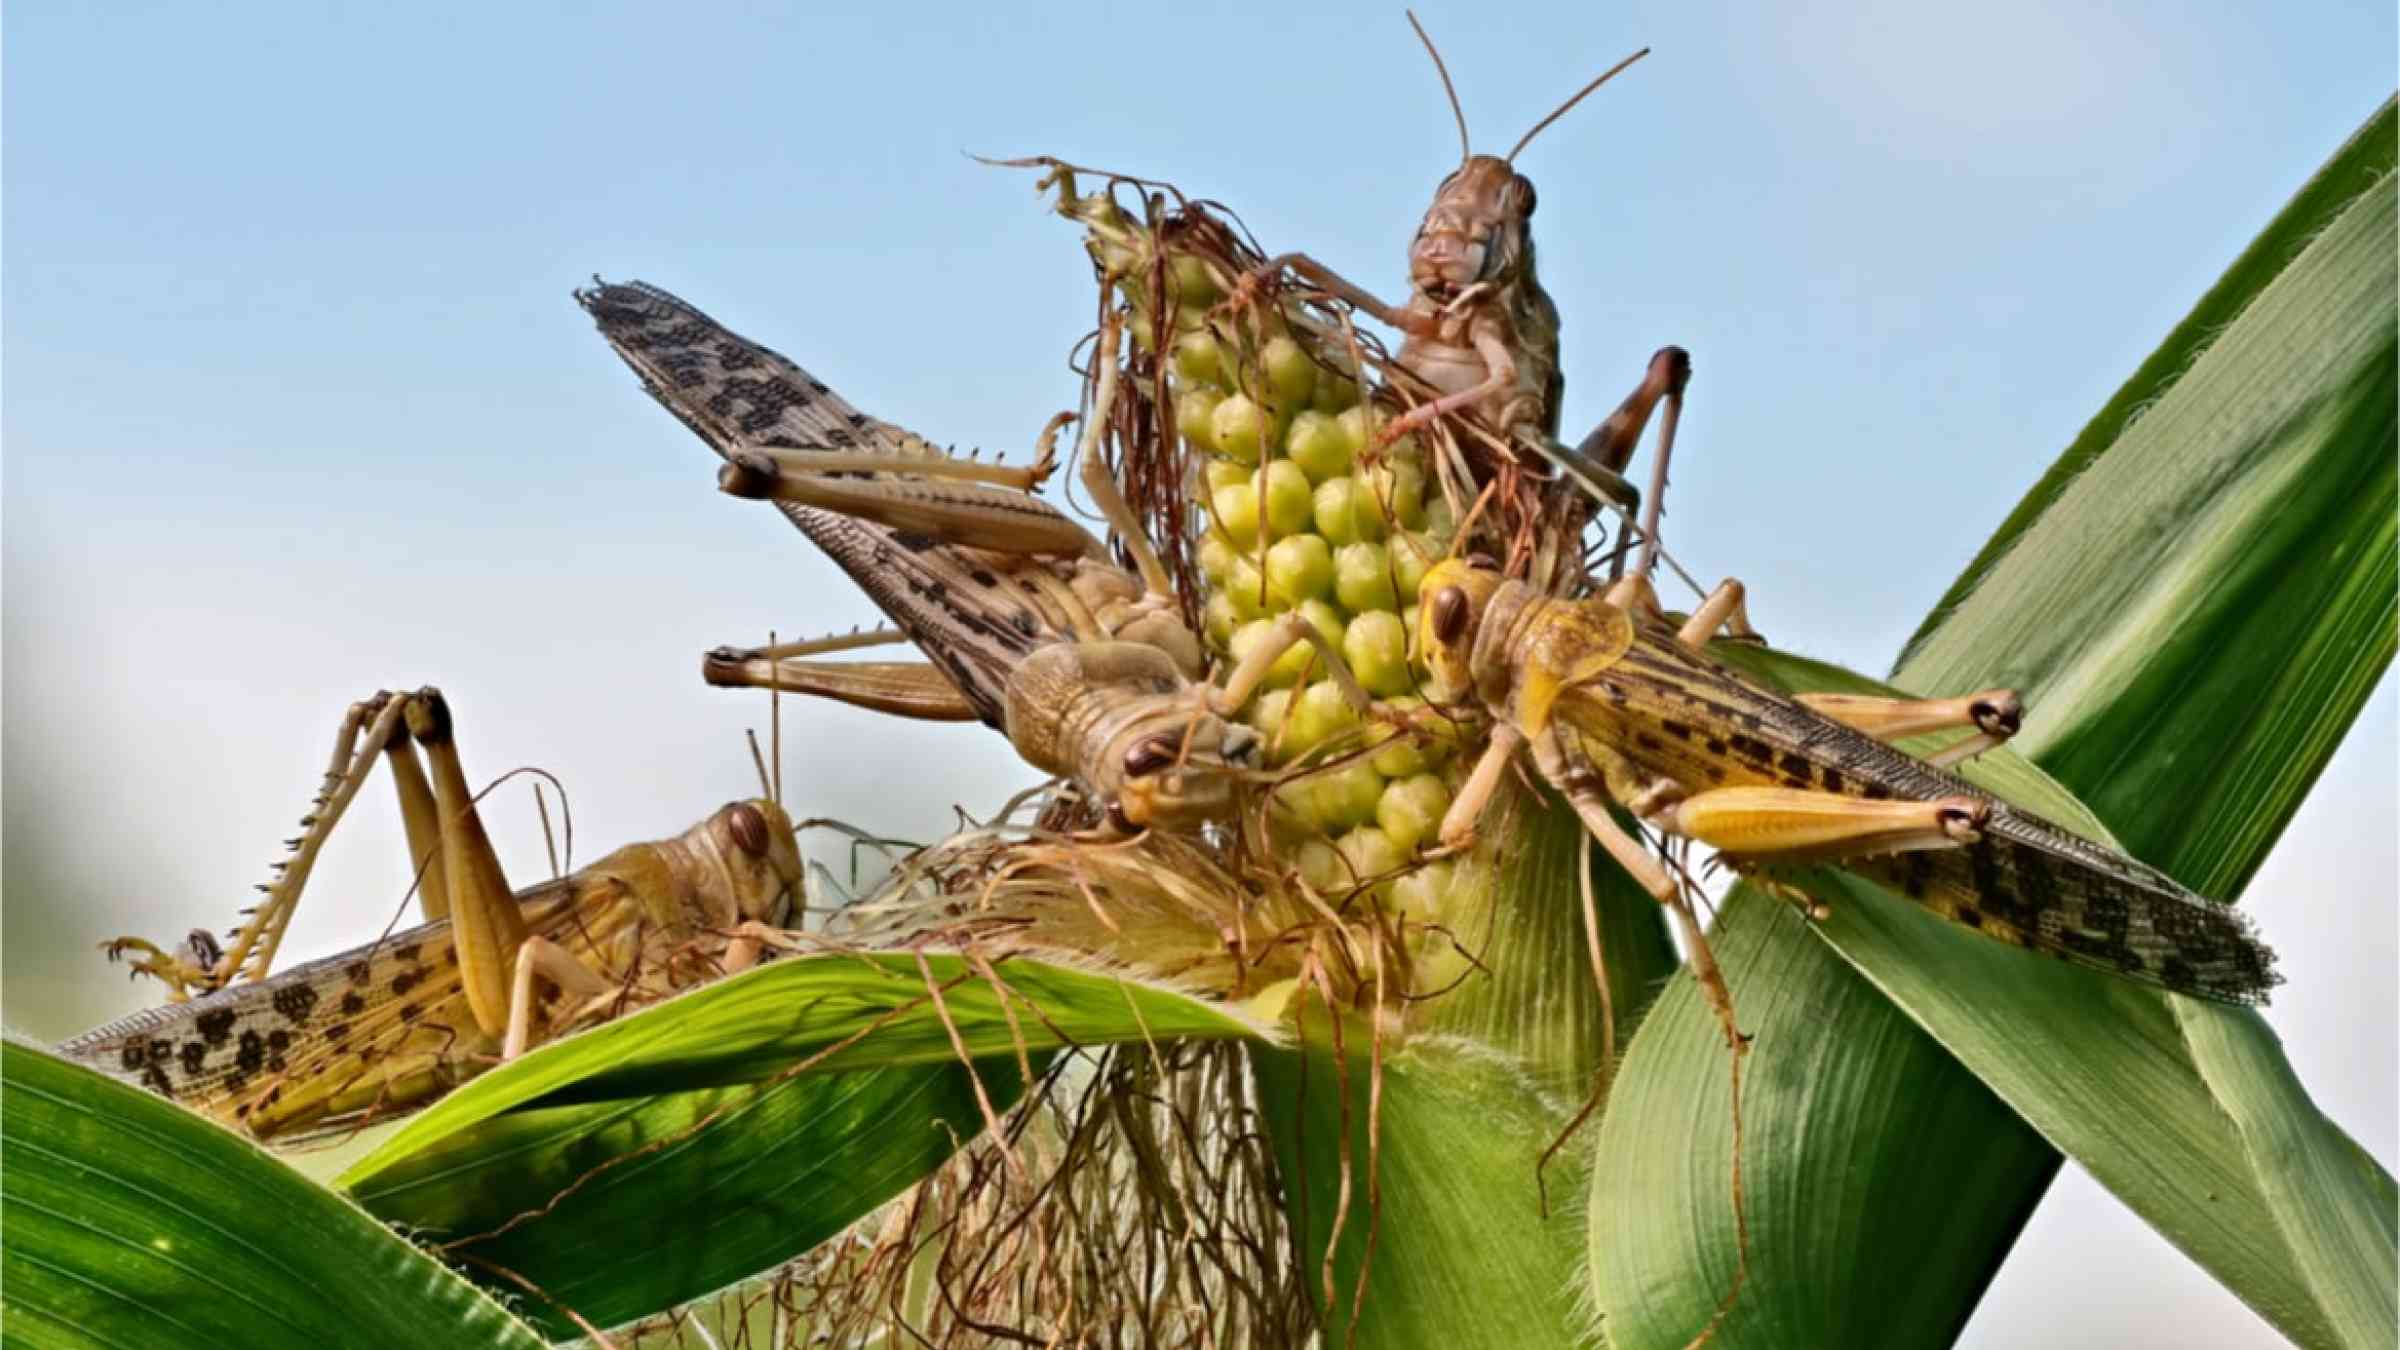 Close-up on a few desert locusts on corn plants.